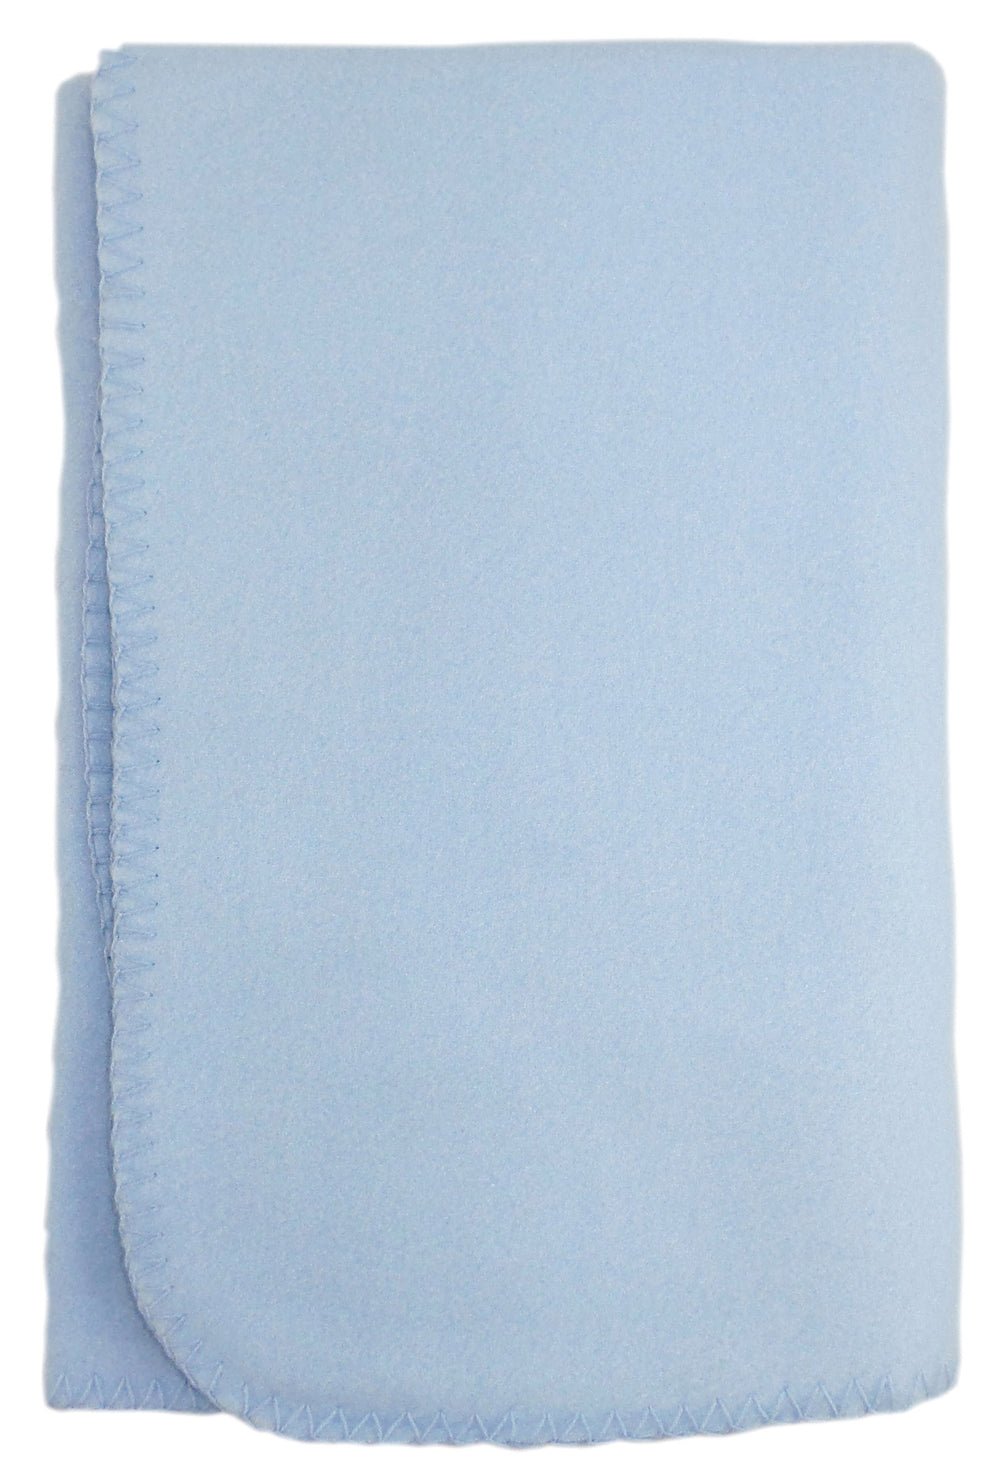 Blank Blue Polarfleece Blanket